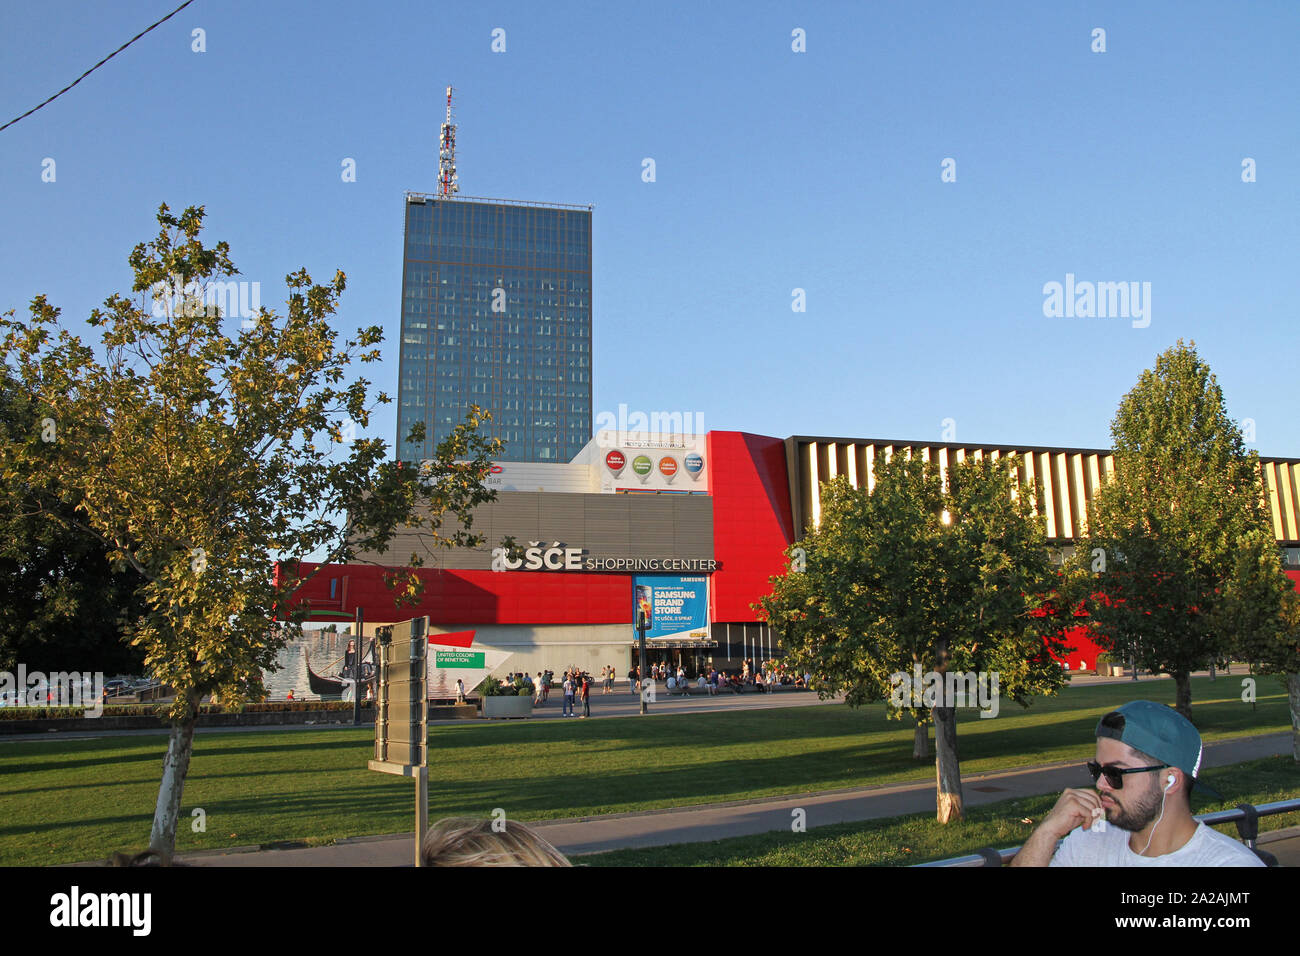 USCE Shopping Center Bulevar Mihajla Pupina Straße, Neu Belgrad, Serbien. Stockfoto